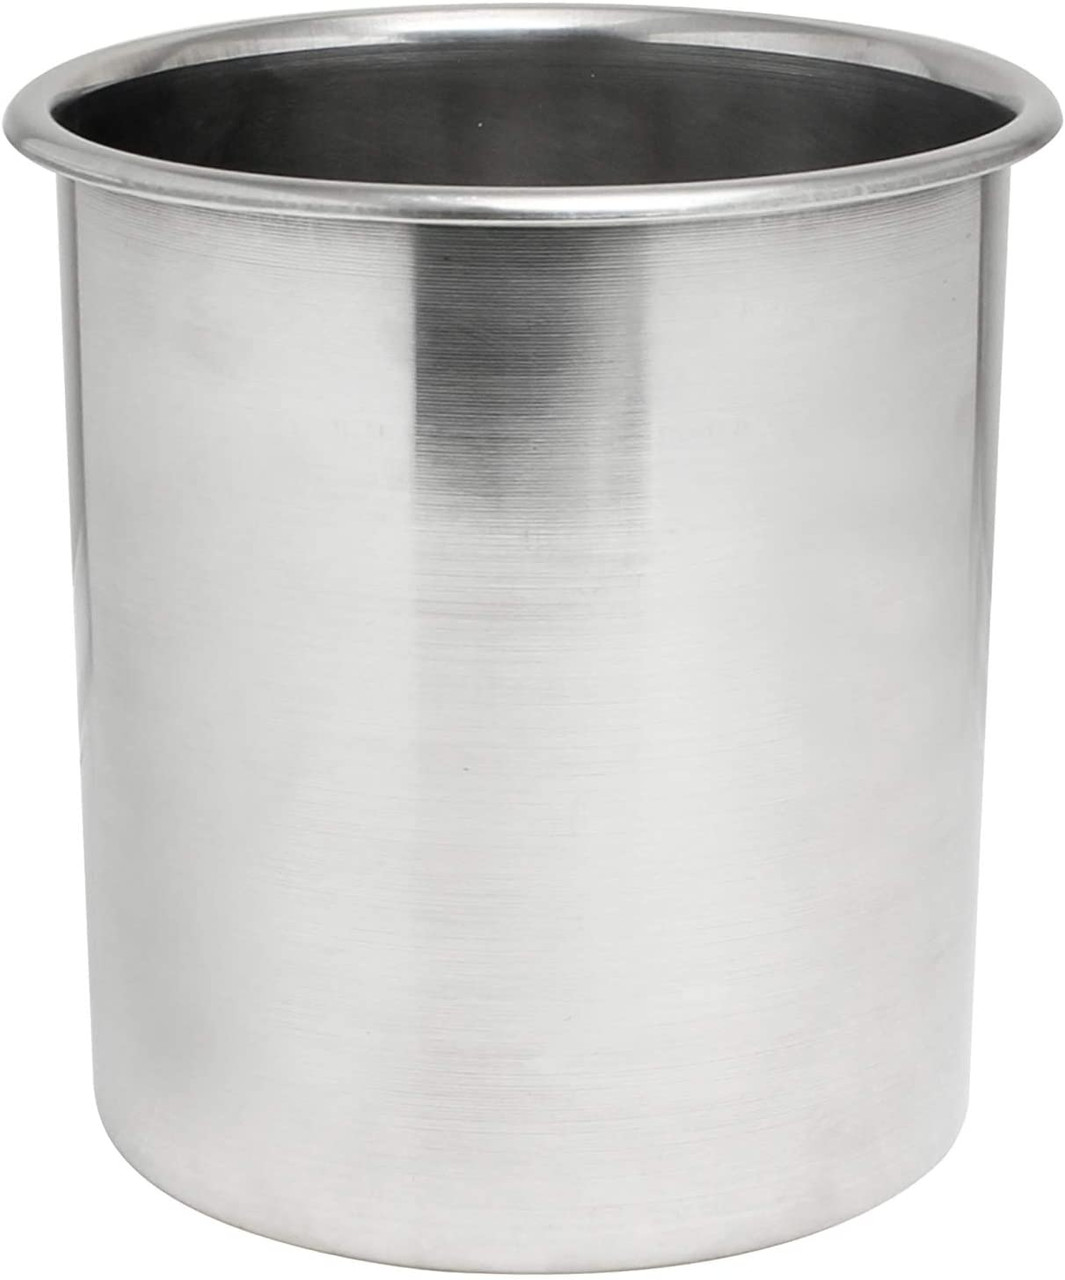 Choice 6 Qt. Stainless Steel Bain Marie Pot